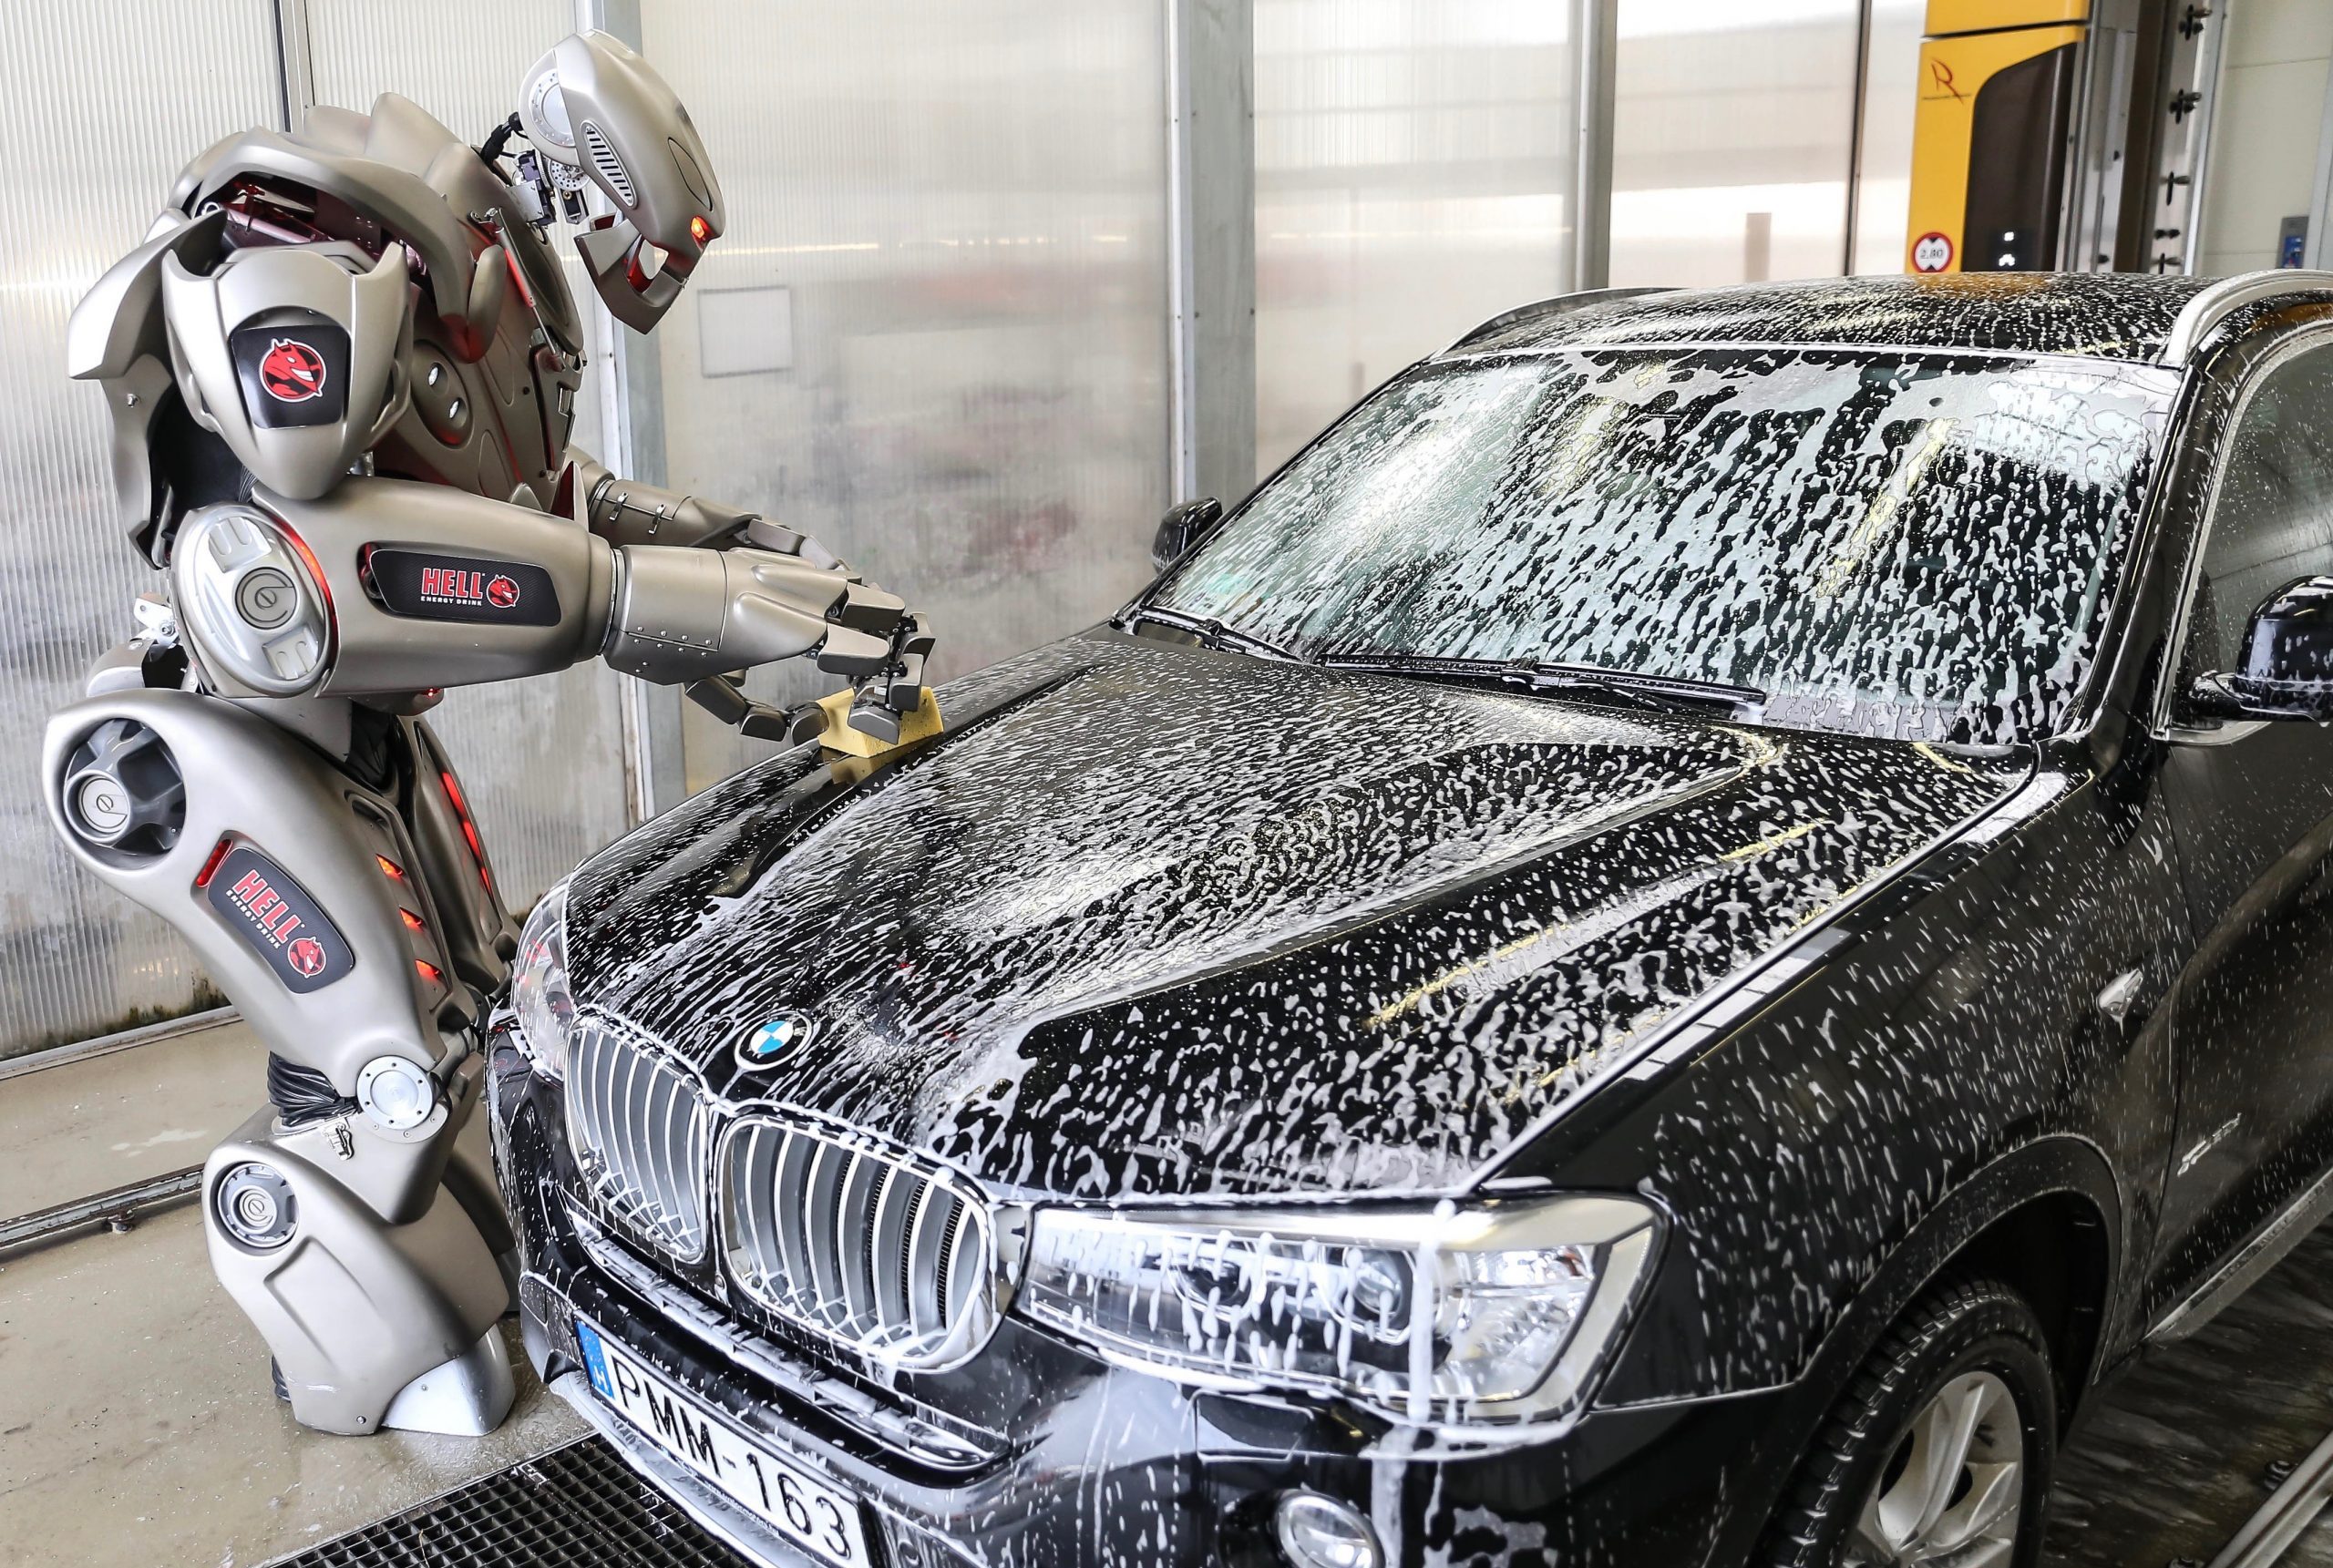 Titan the Robot washing a BMW car in Hungary